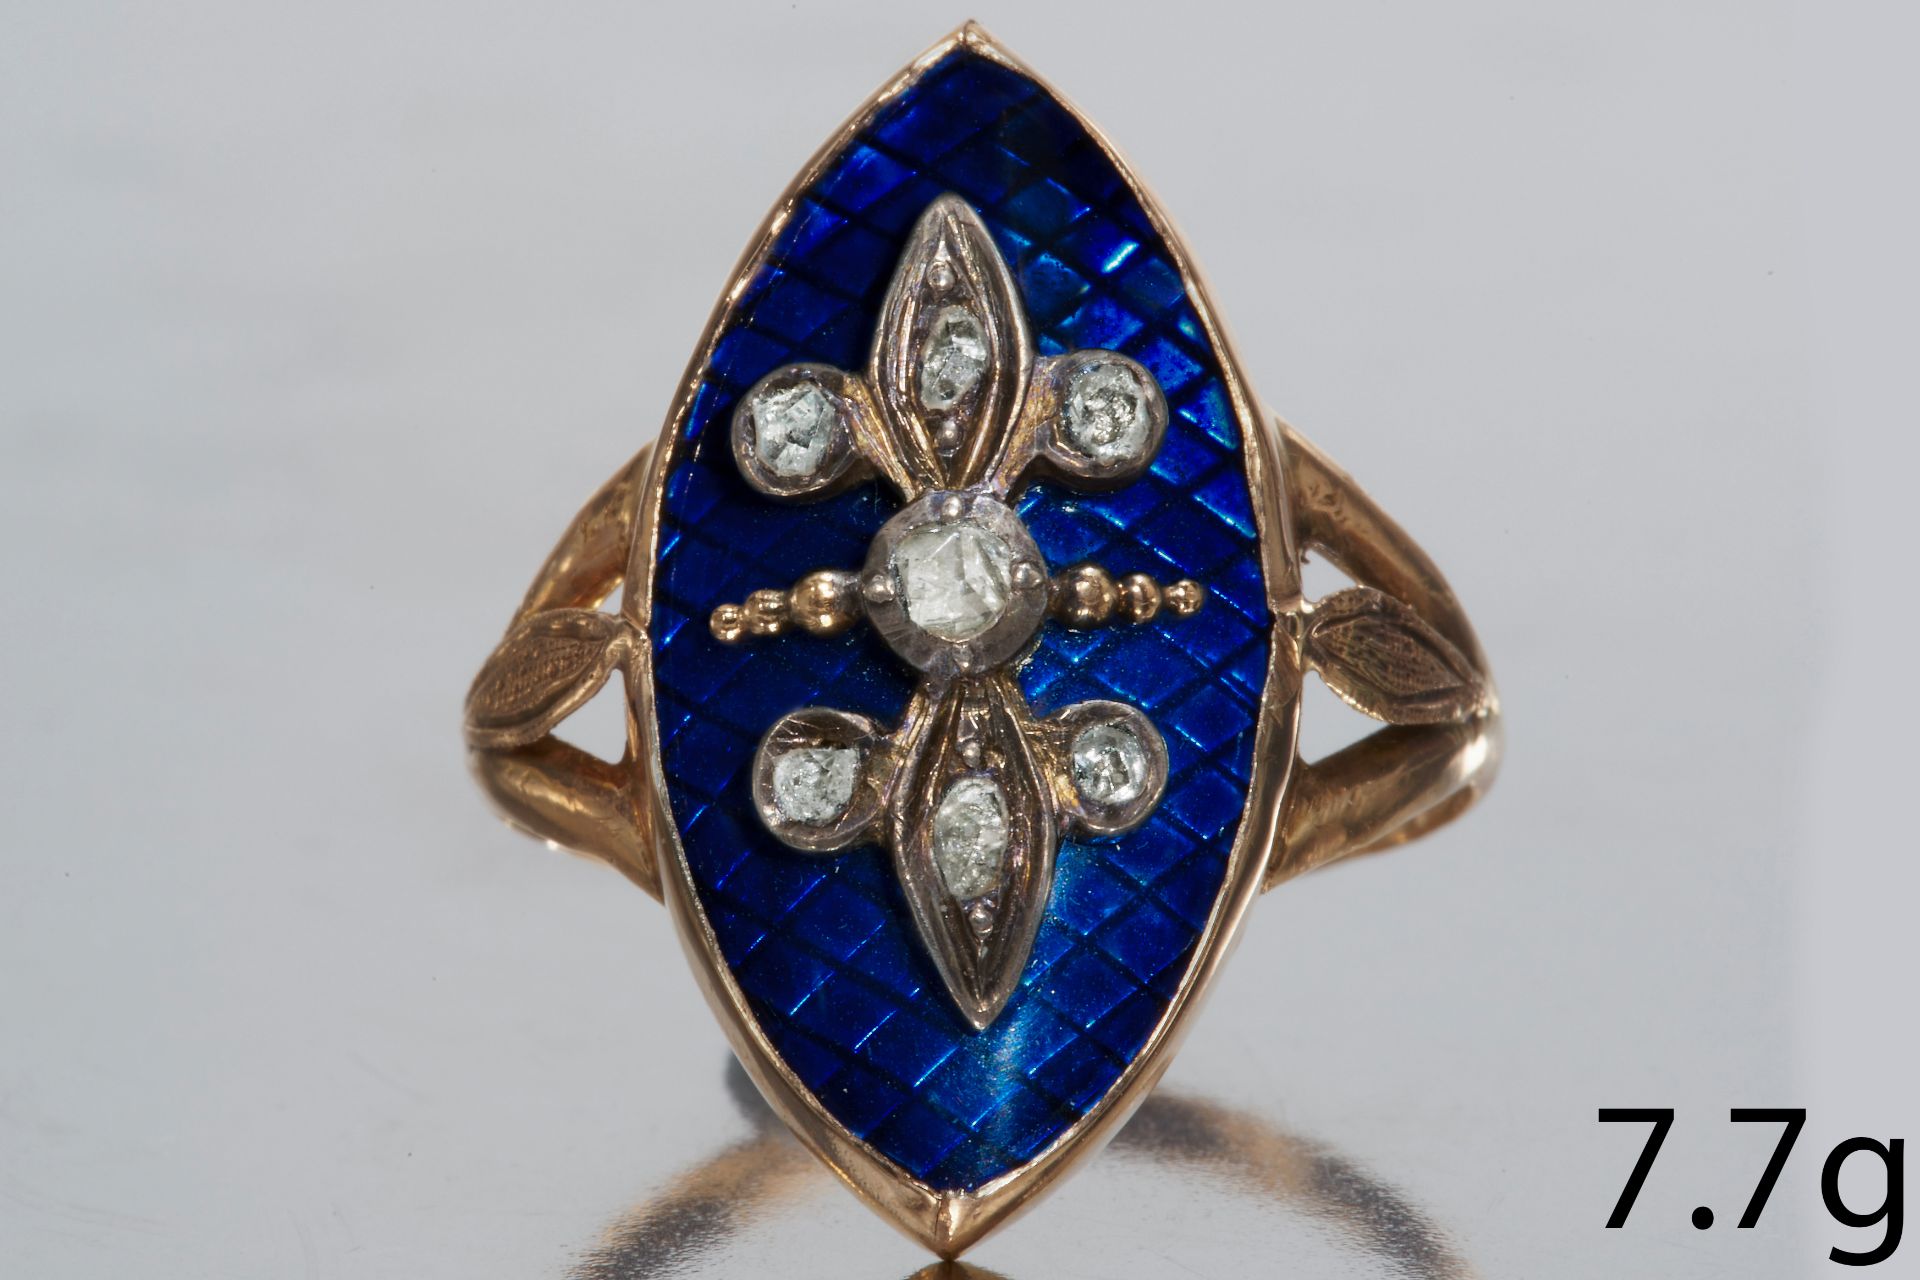 ANTIQUE GEORGIAN DIAMOND AND ENAMEL RING